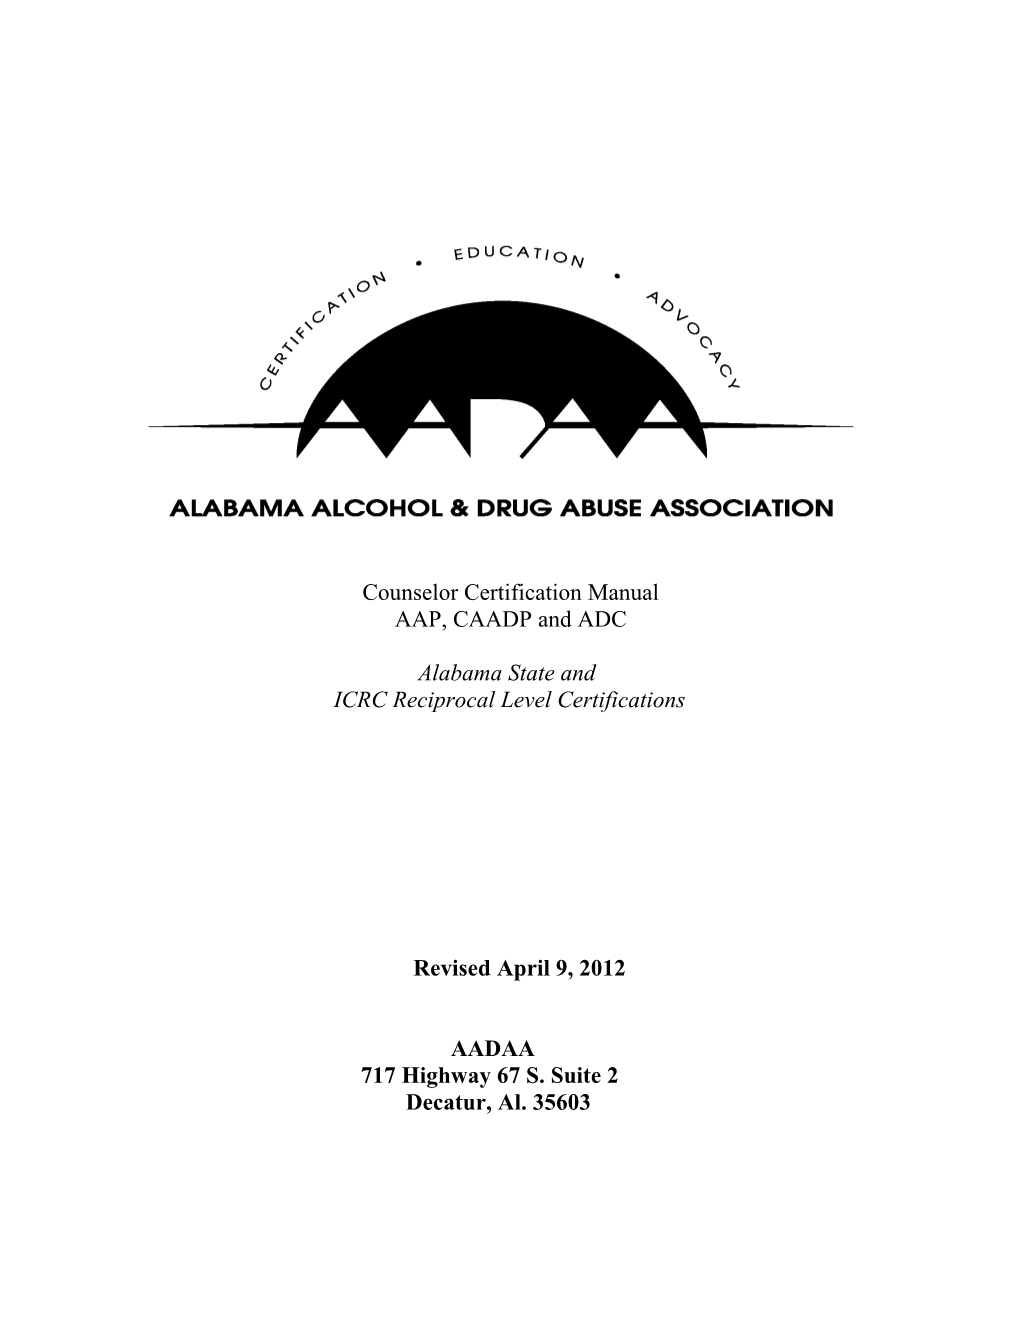 The Alabama Alcohol & Drug Abuse Association s1